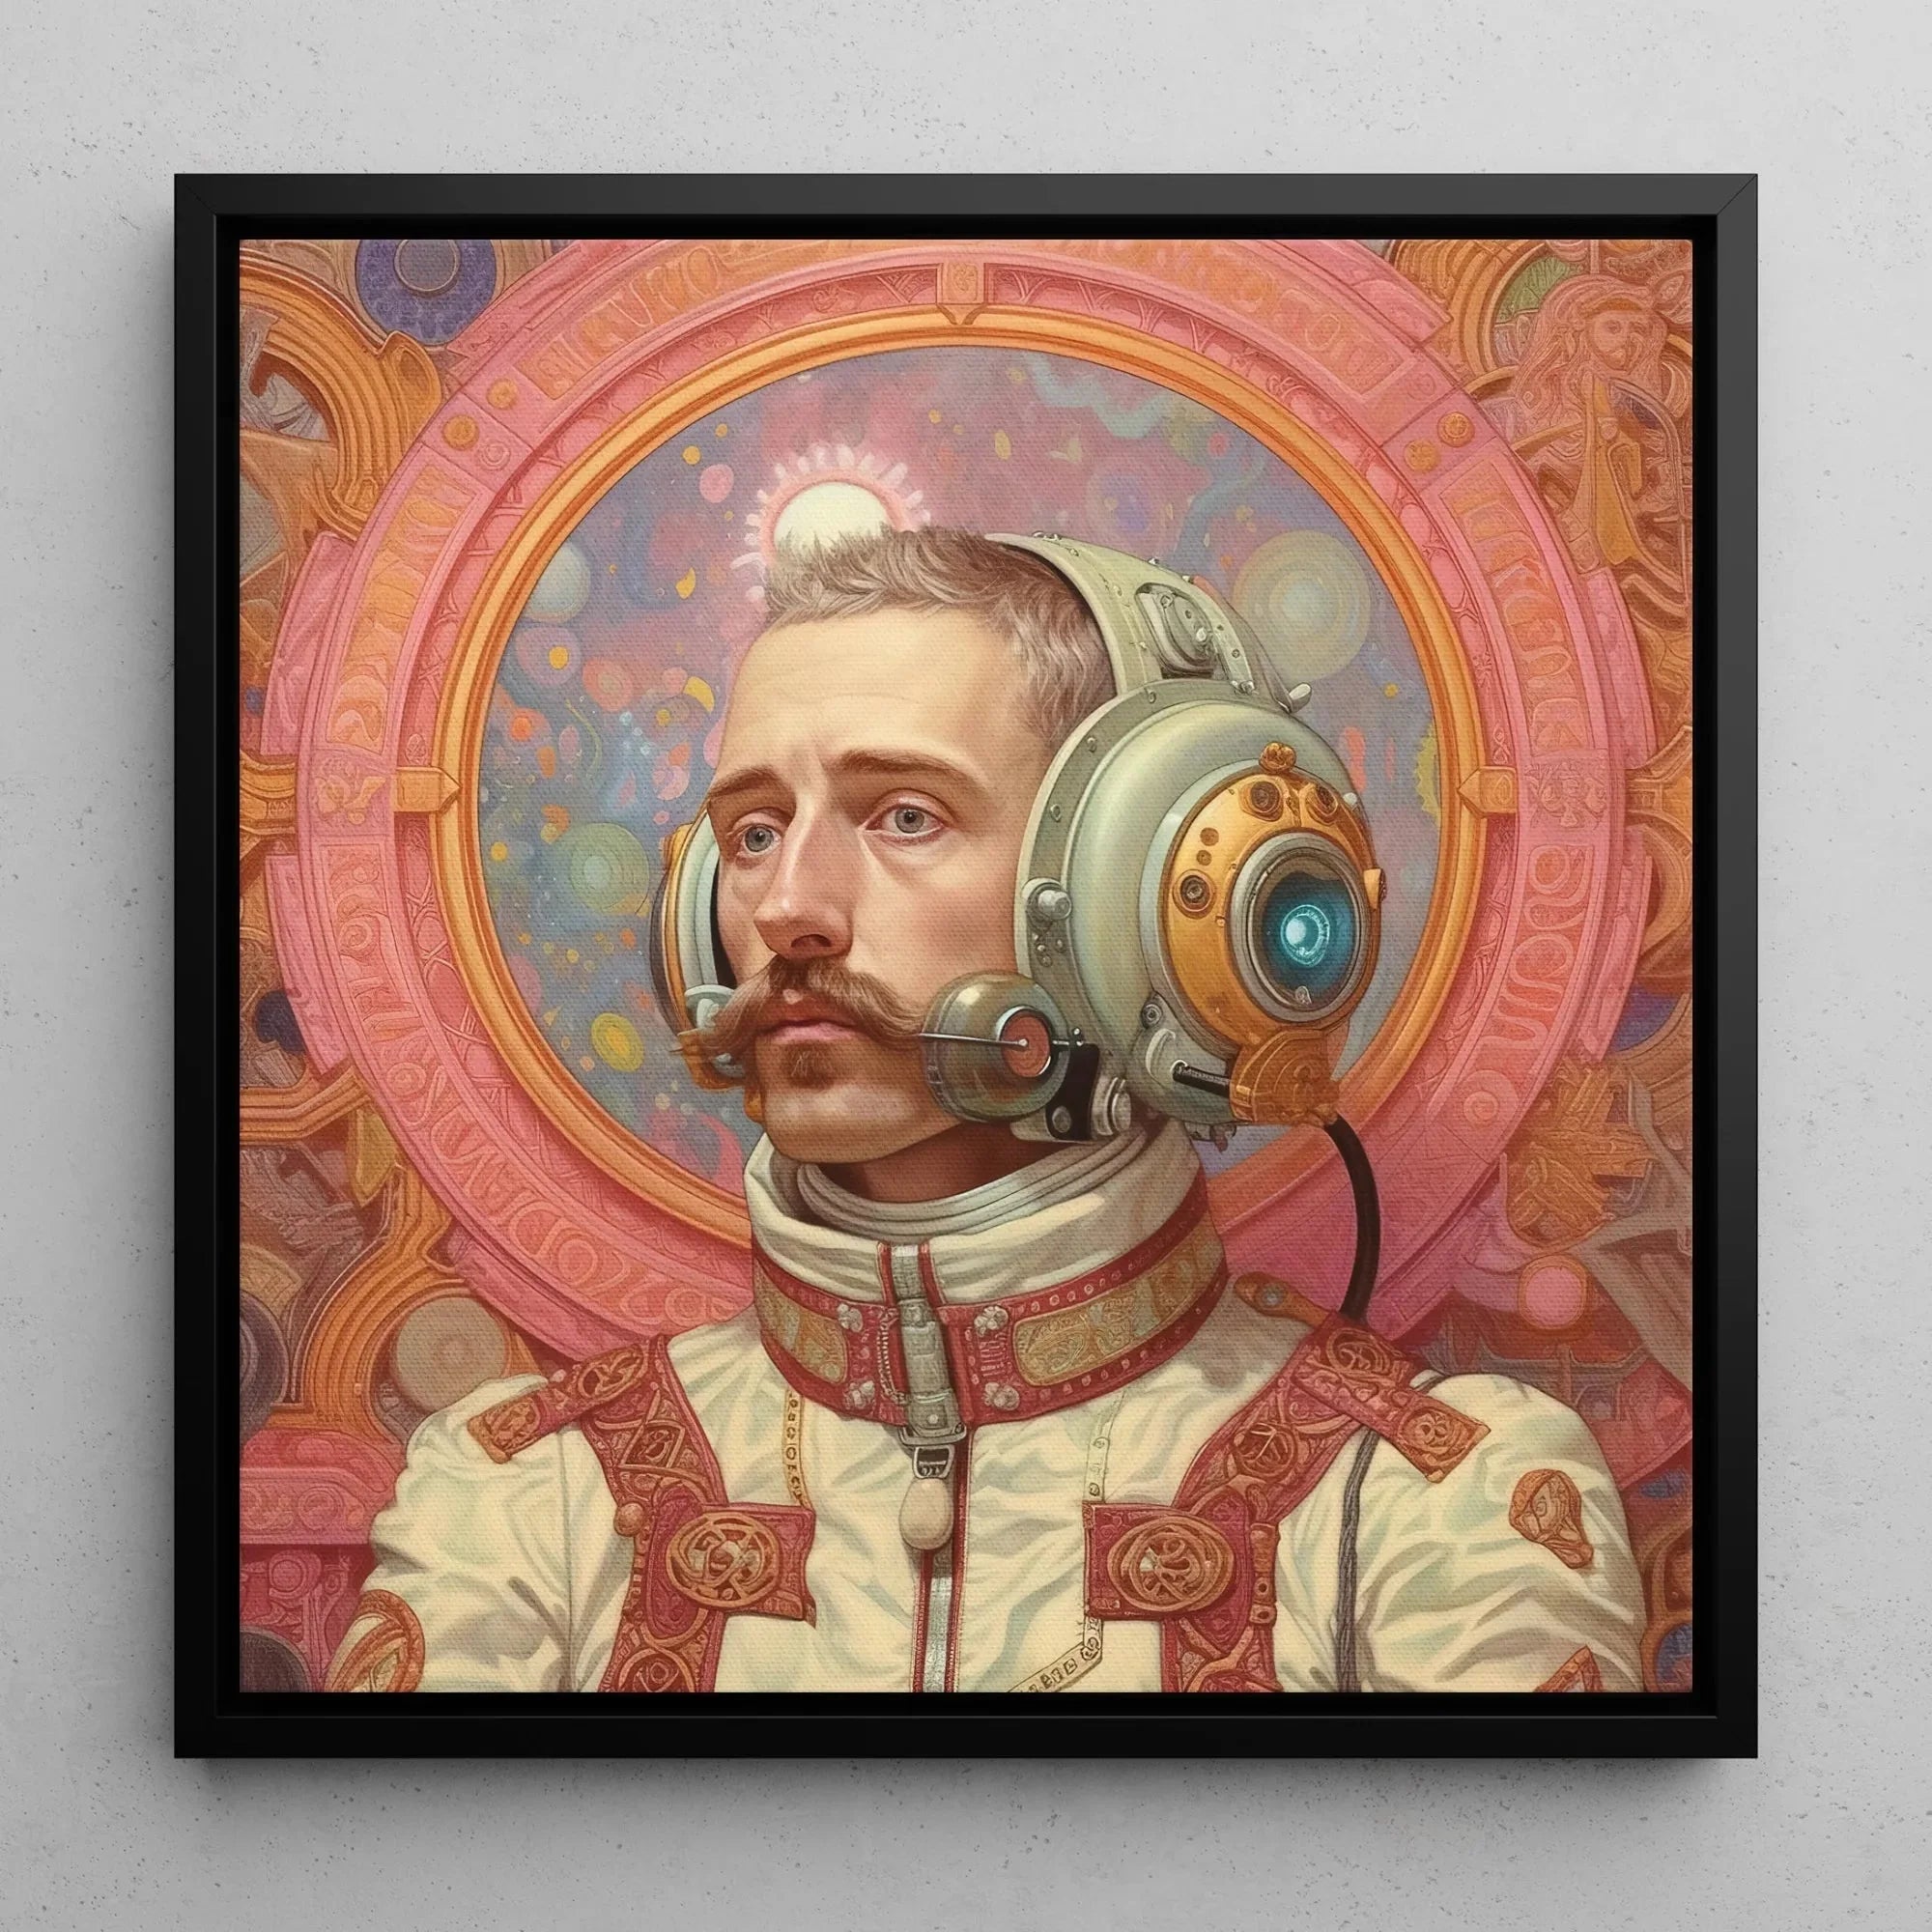 Axel The Gay Astronaut Art Print - Lgbtq Framed Canvas - Posters Prints & Visual Artwork - Aesthetic Art